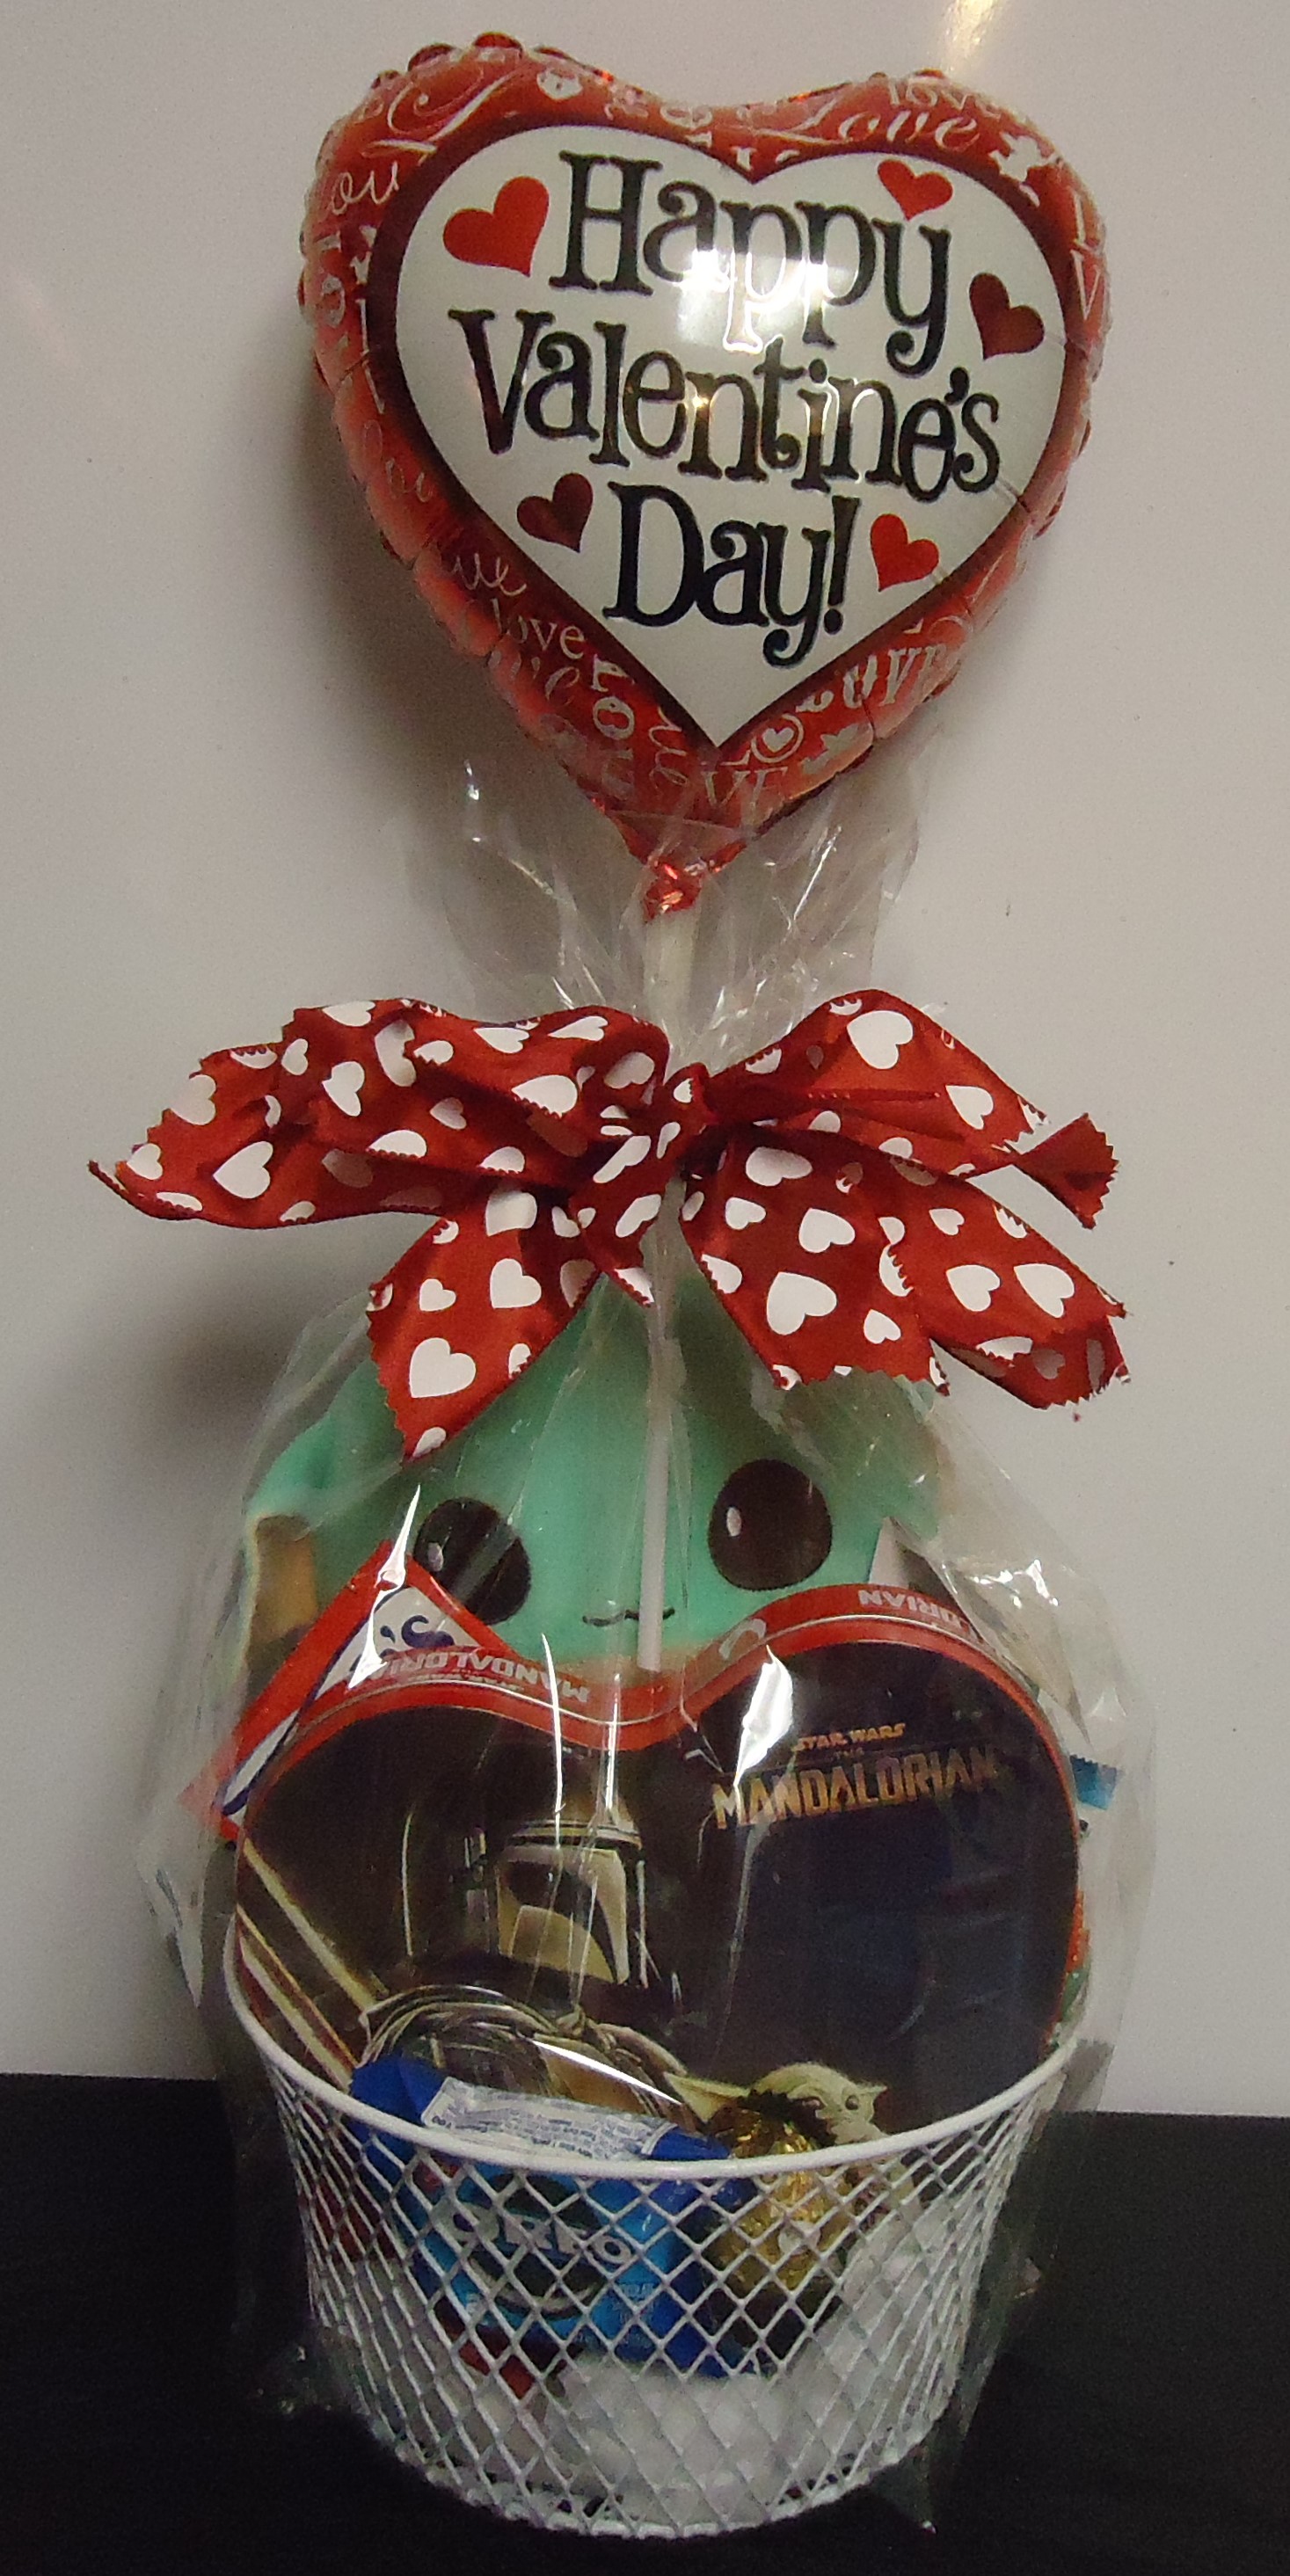 (14B) Mandalorian Plush
W/ Candy Heart Box & Balloon
$40.00